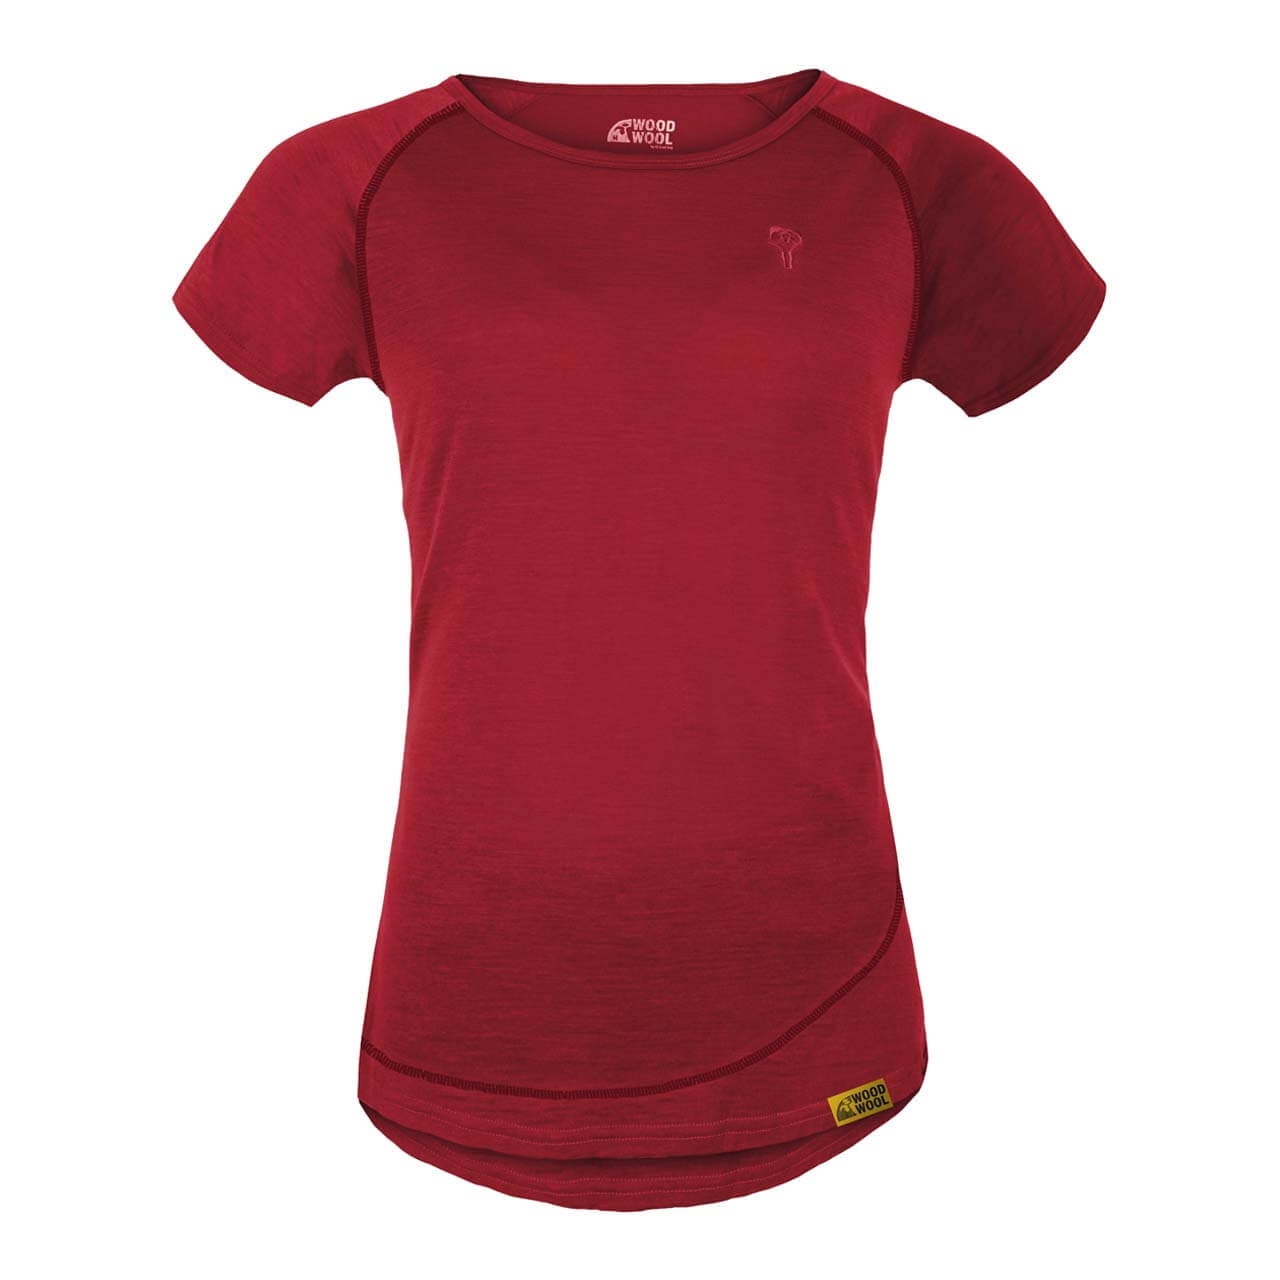 Grüezi Bag WoodWool T-Shirt Lady Burnham - Fired Red Brick, XS von Grüezi Bag